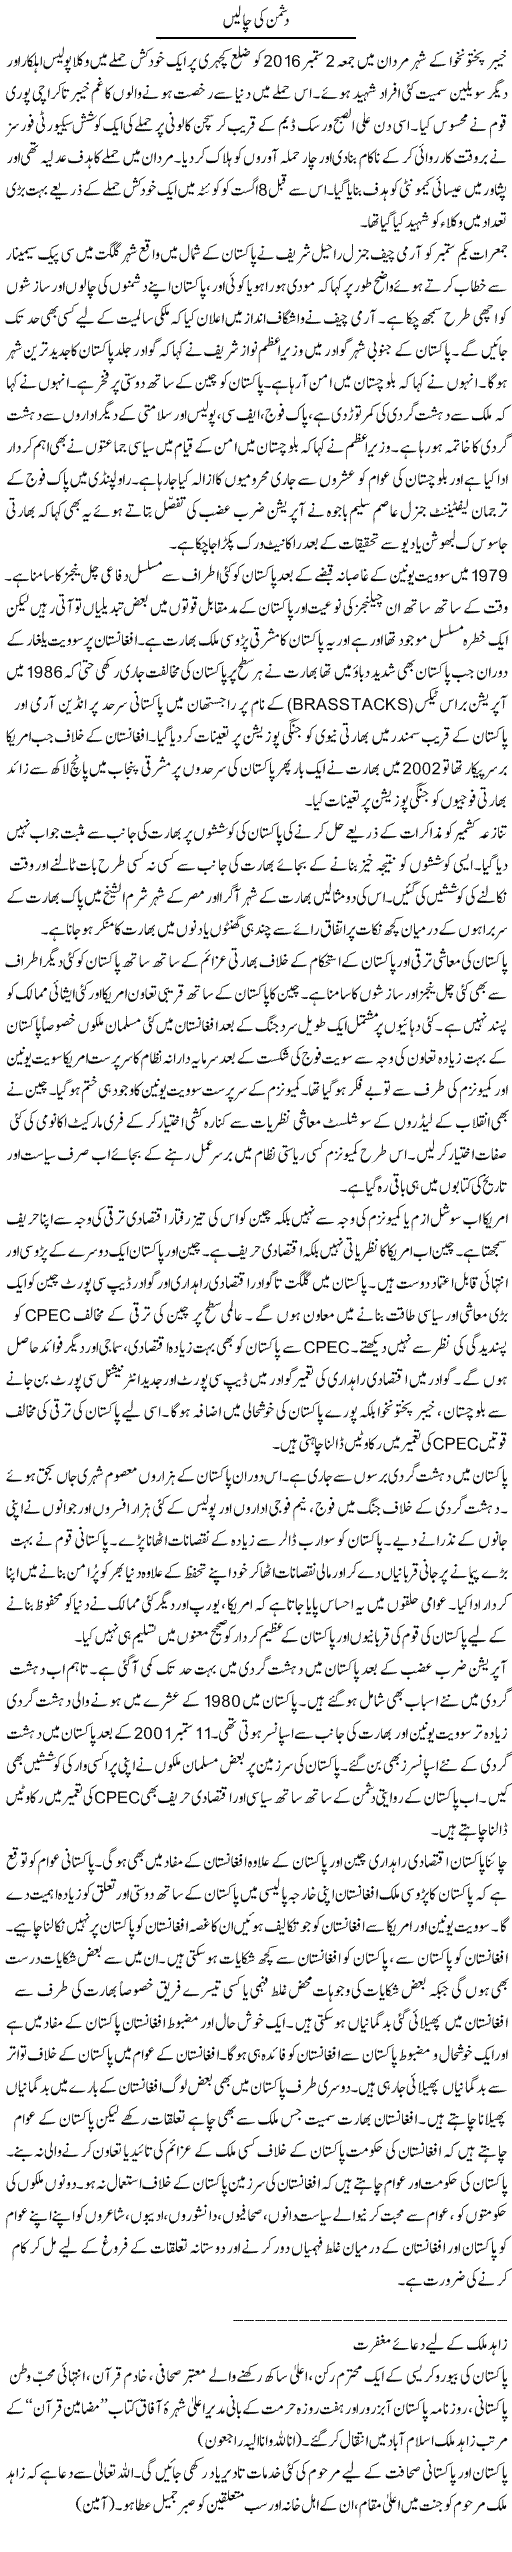 Dushman Ki Chaal | Dr. Waqar Yousuf Azeemi | Daily Urdu Columns